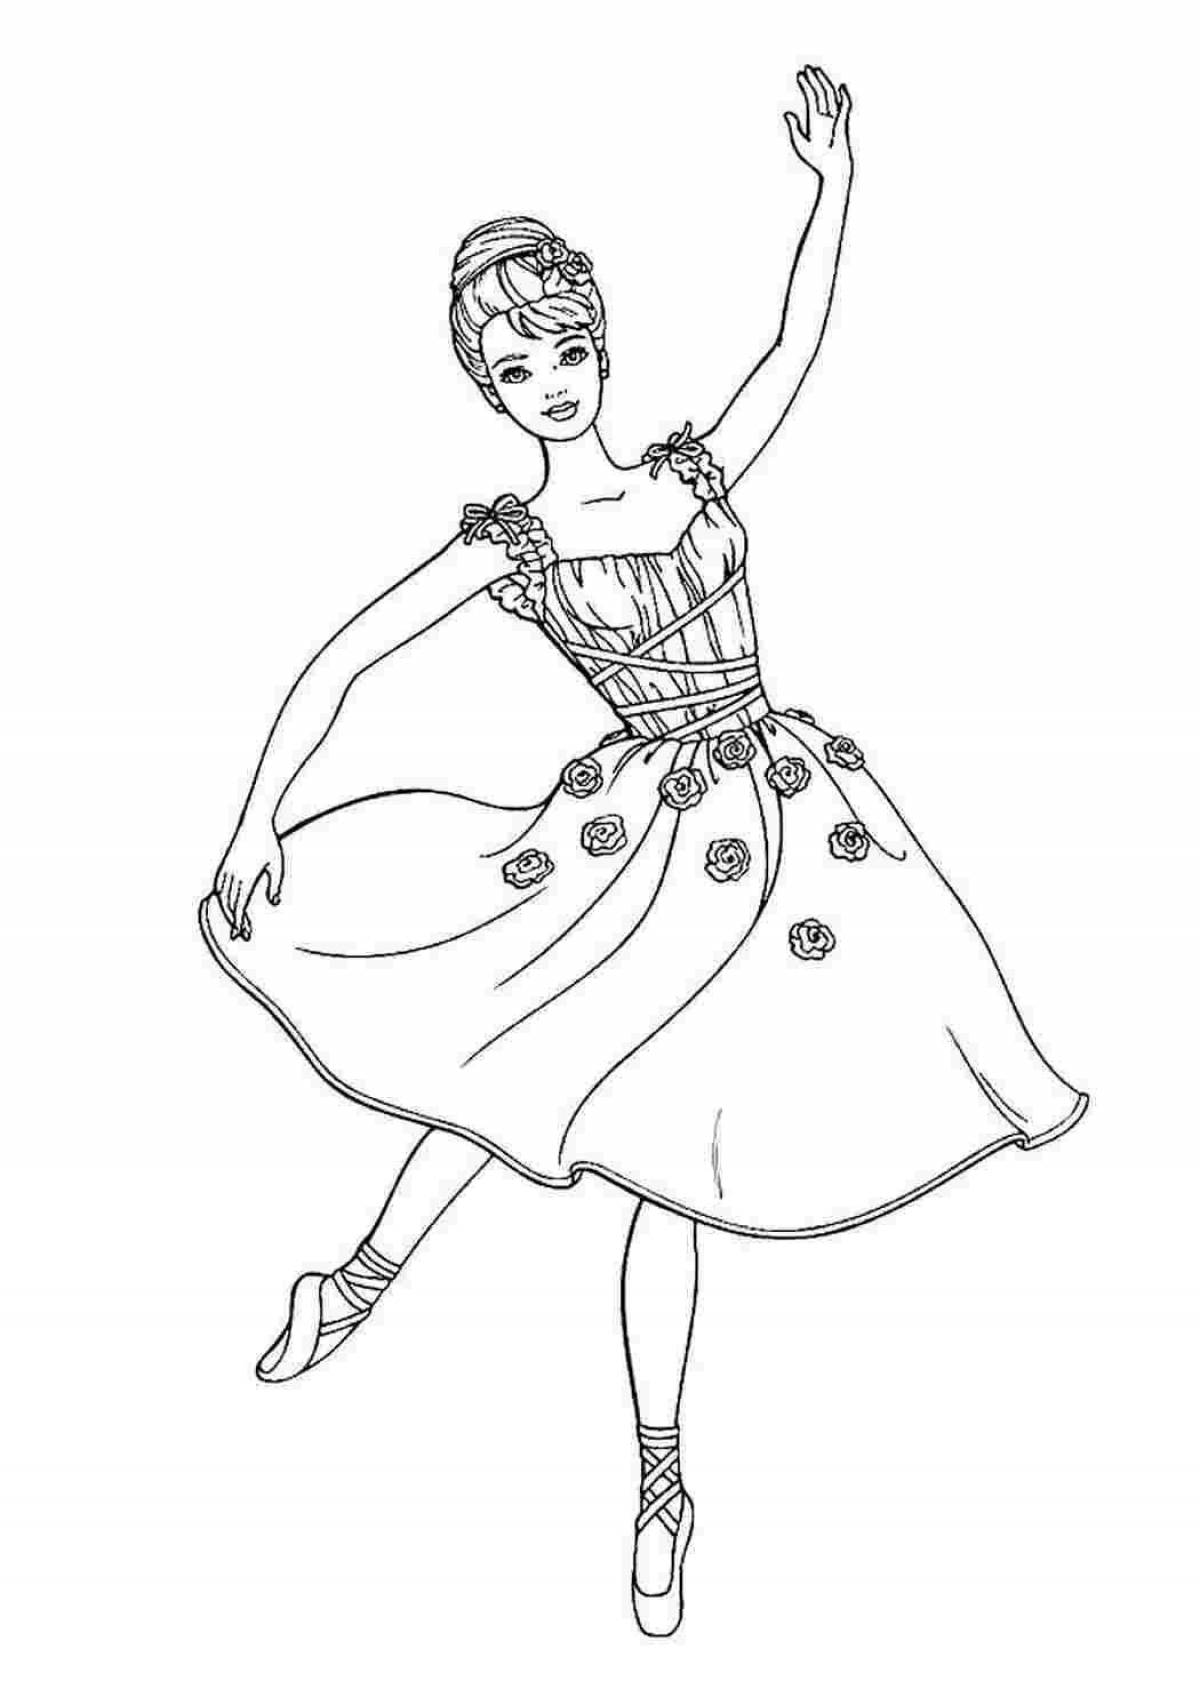 Playful drawing of a ballerina